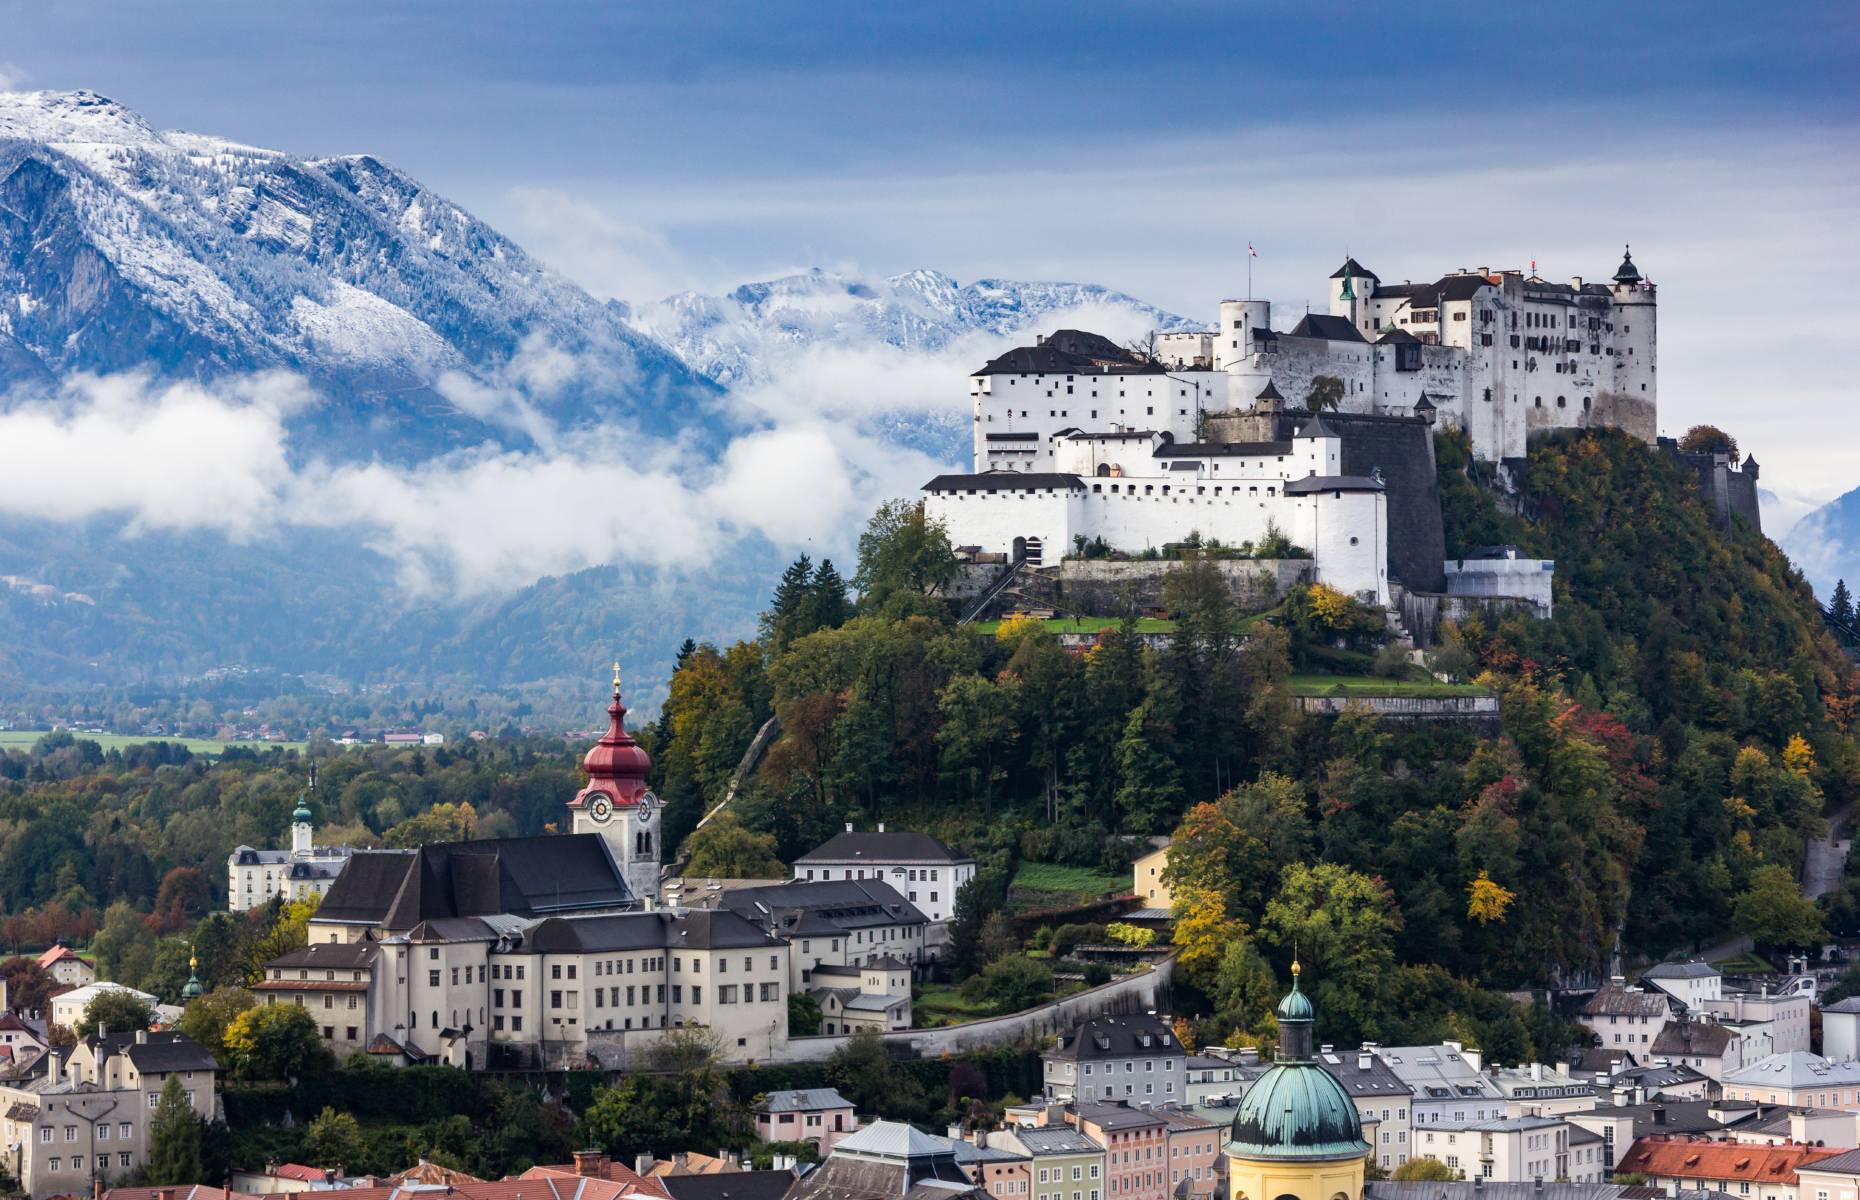 Salzburg Skyline, Austria (Image: Kanuman/Shutterstock)